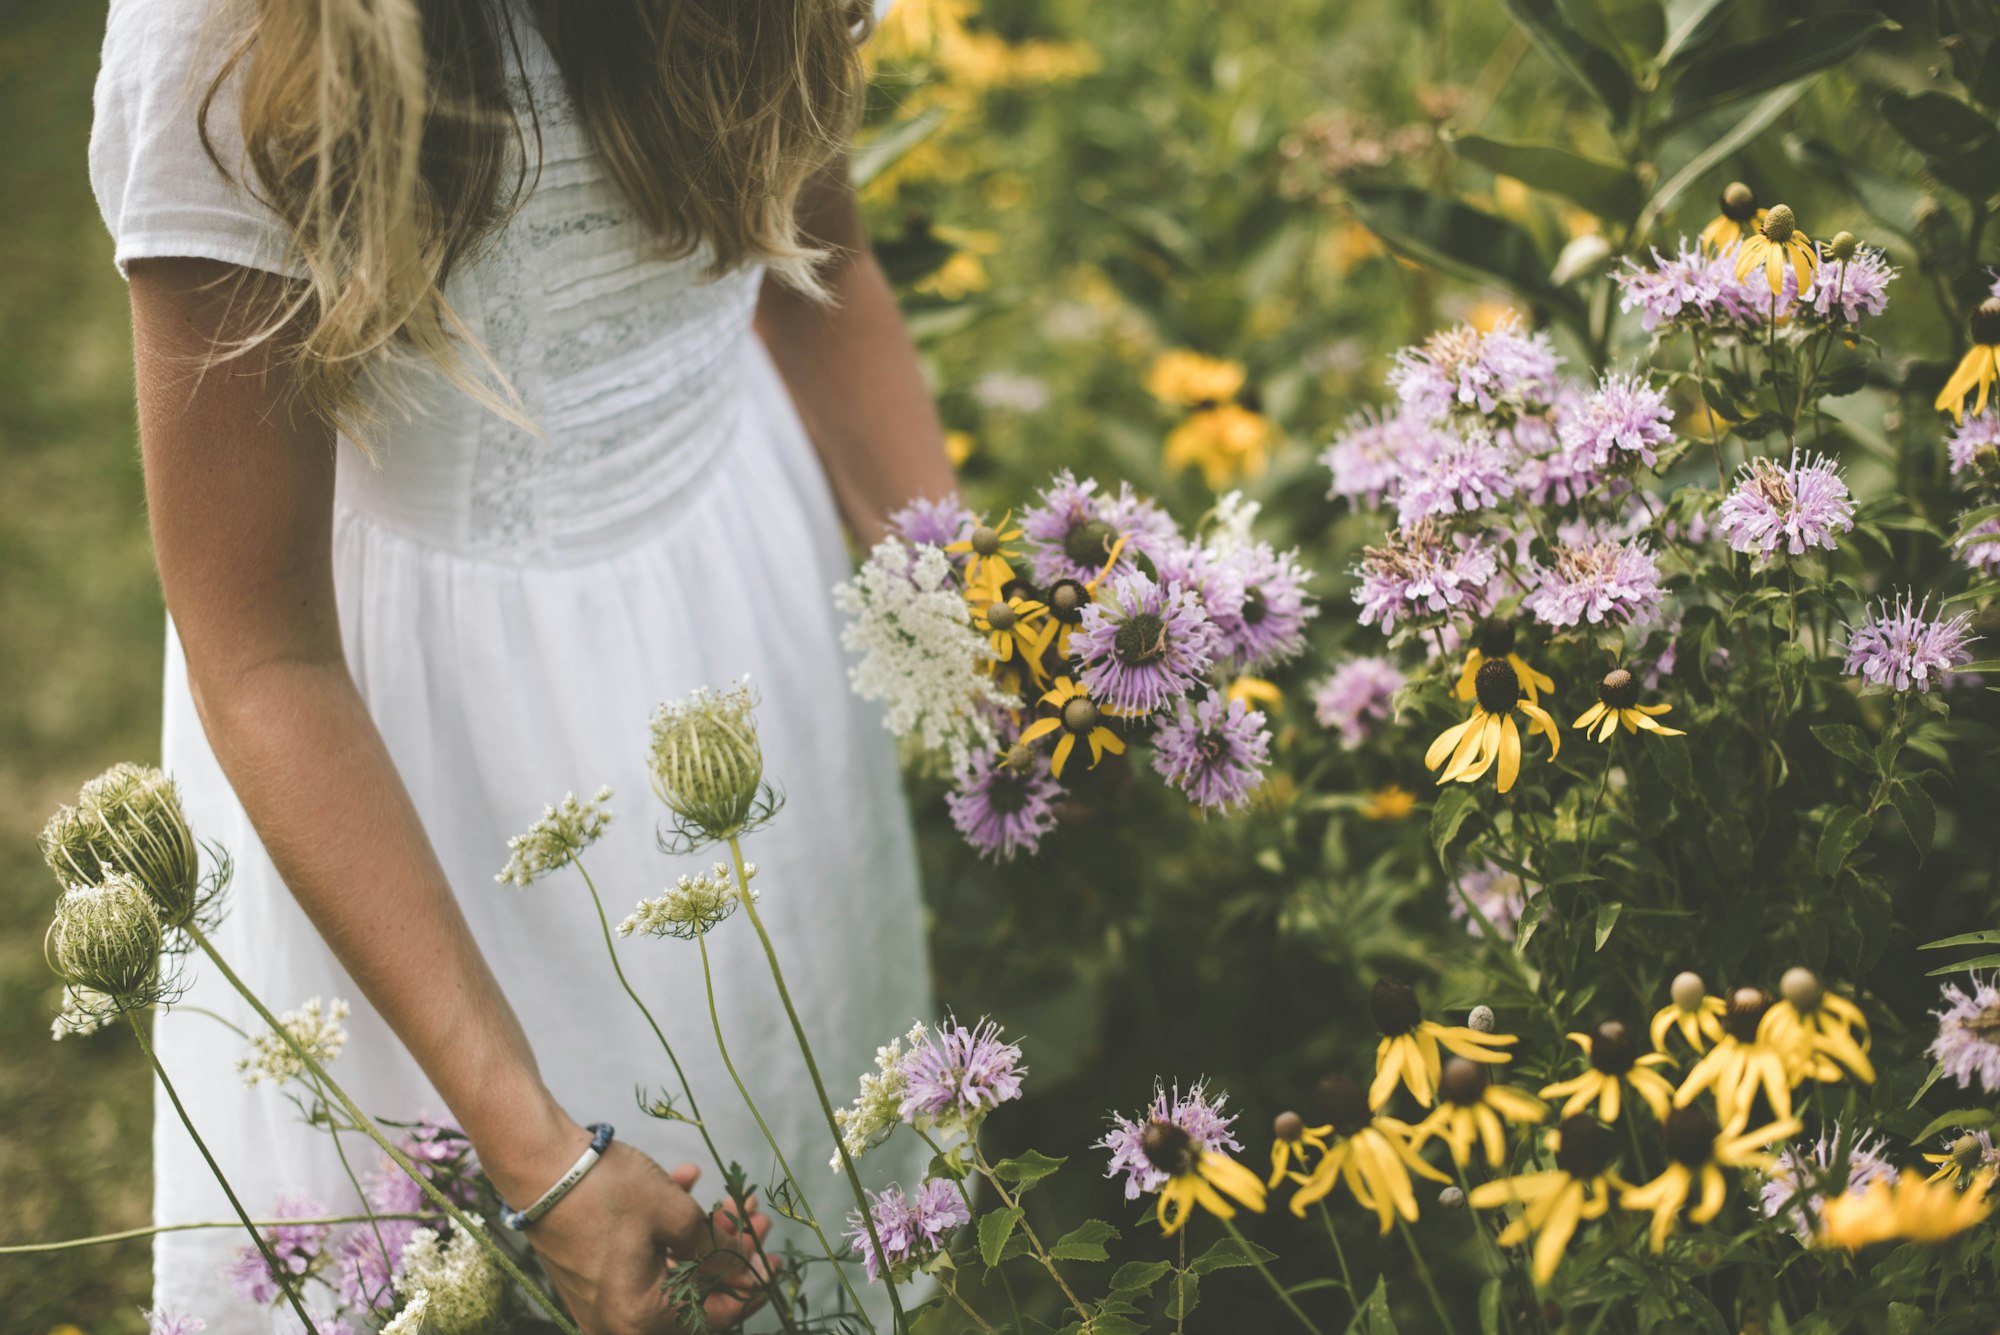 woman wearing white dress picking petaled flower God's goodness